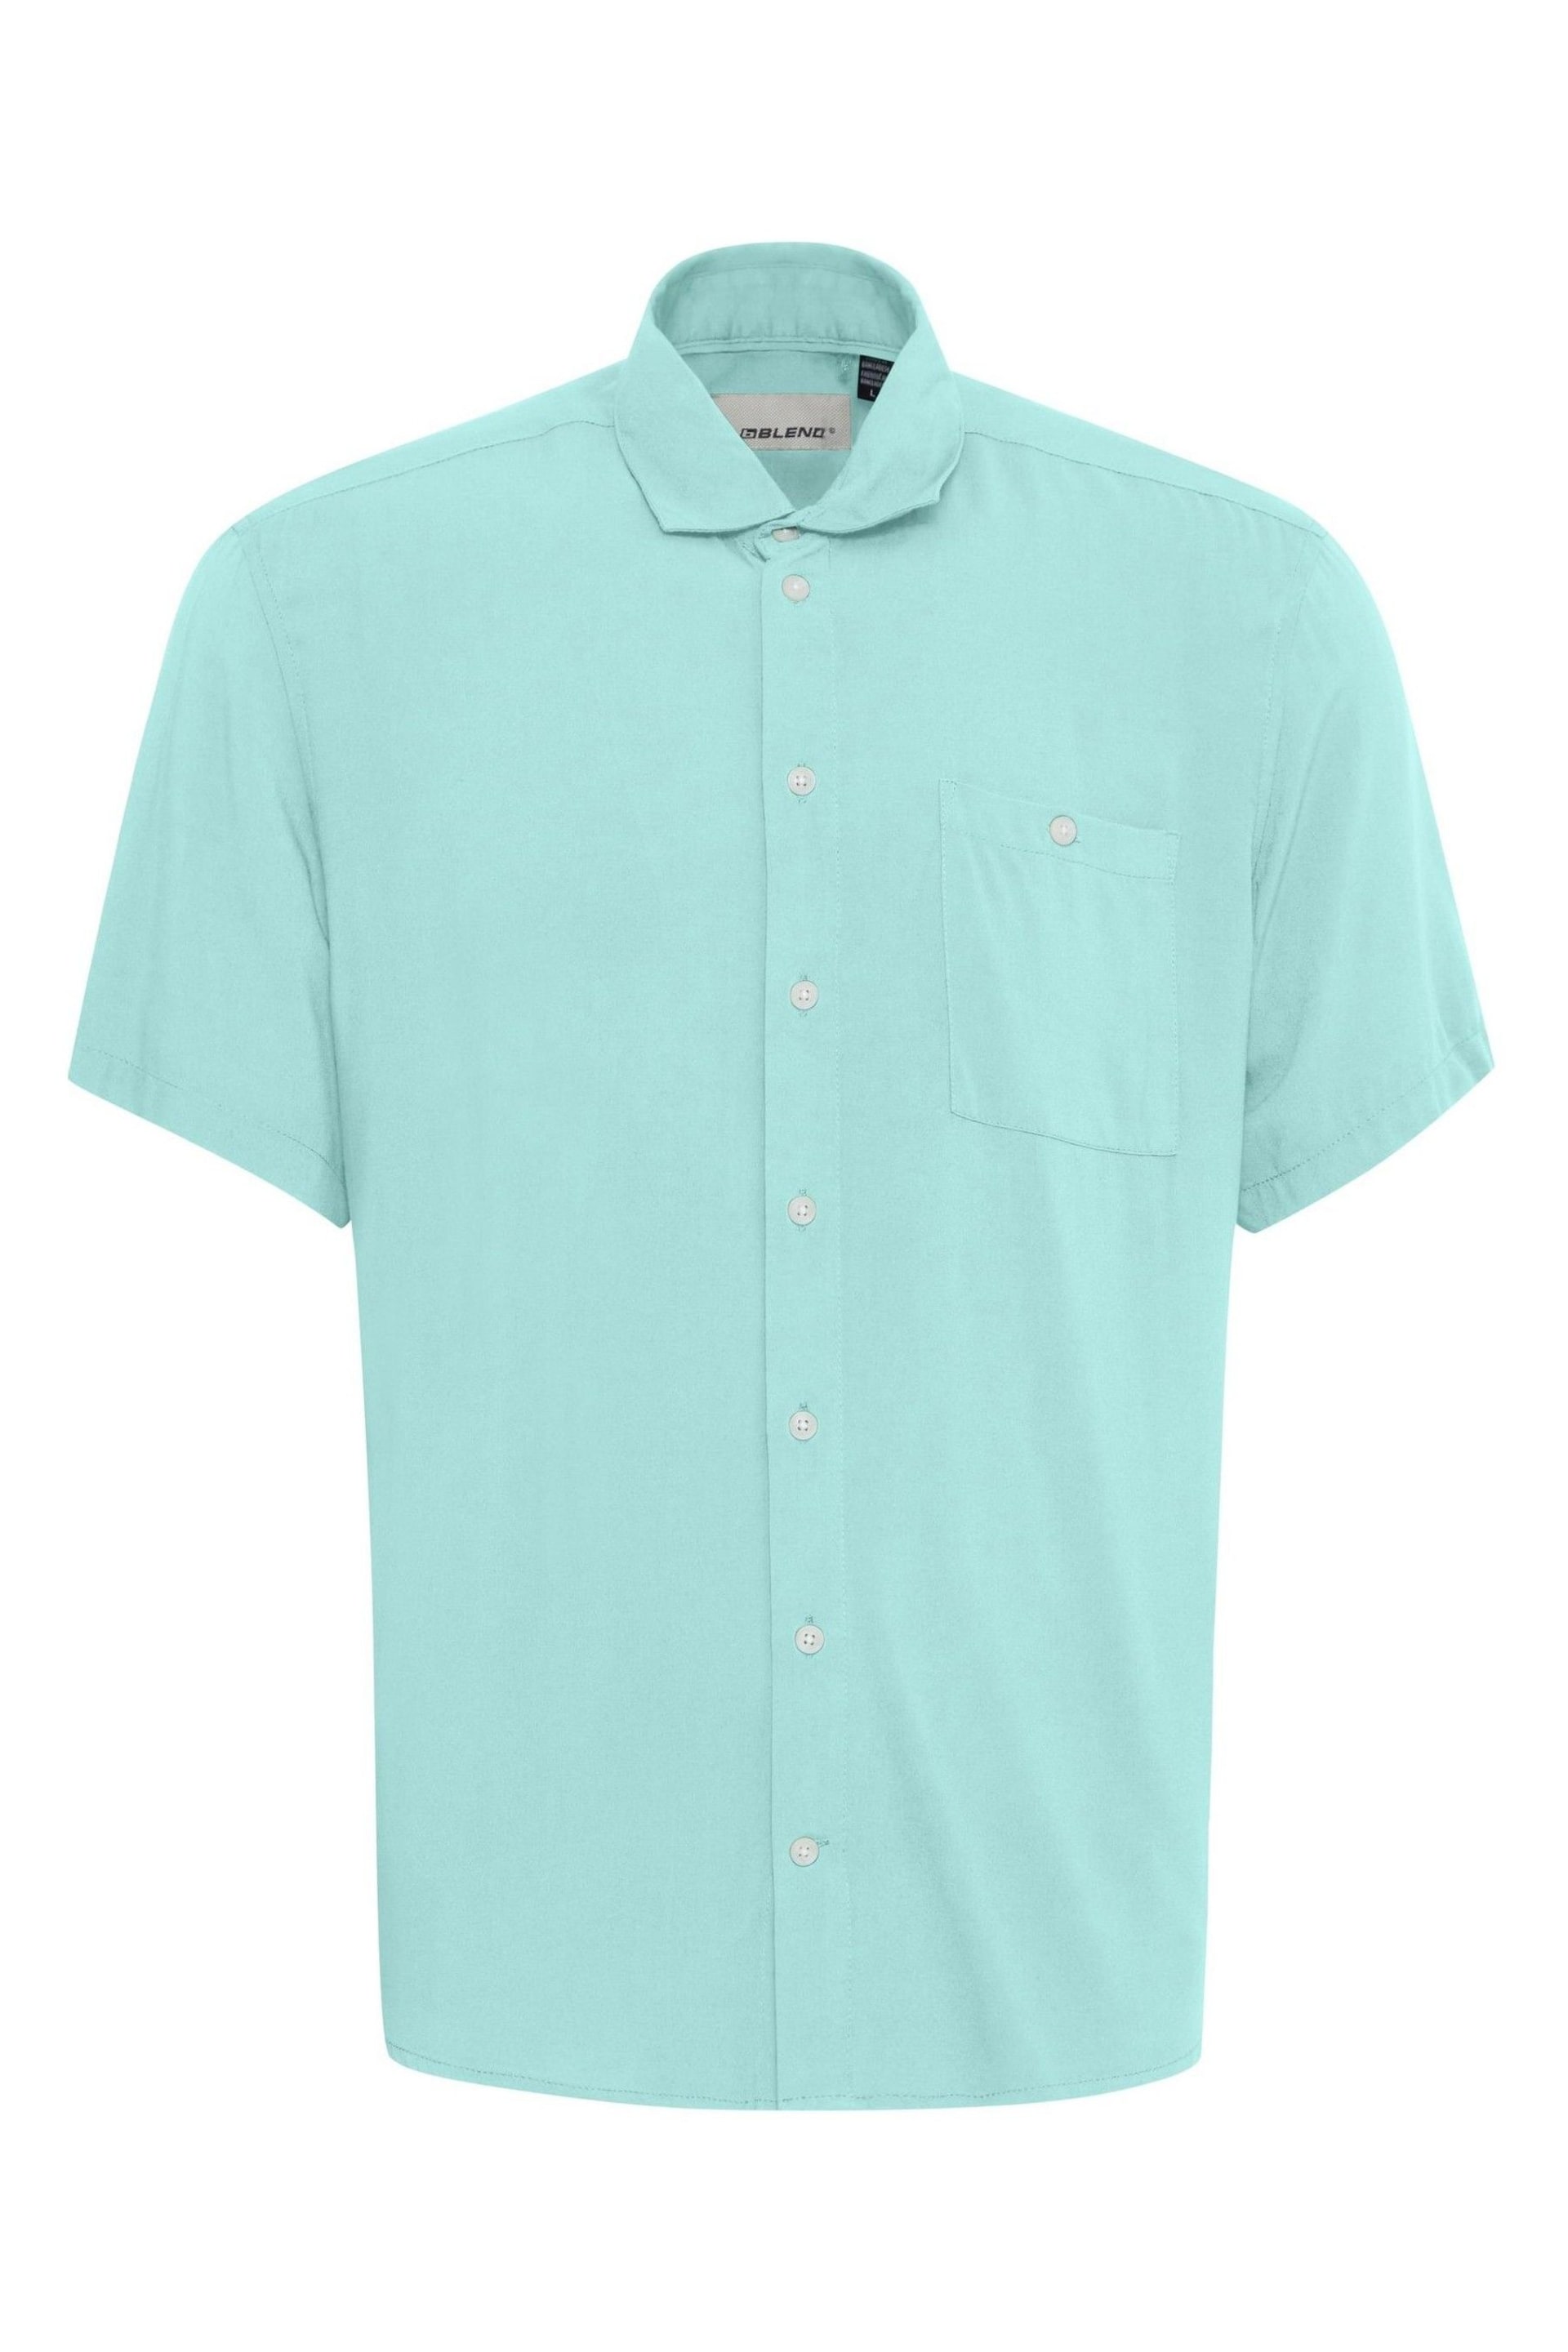 Blend Blue Short Sleeve Shirt - Image 5 of 5